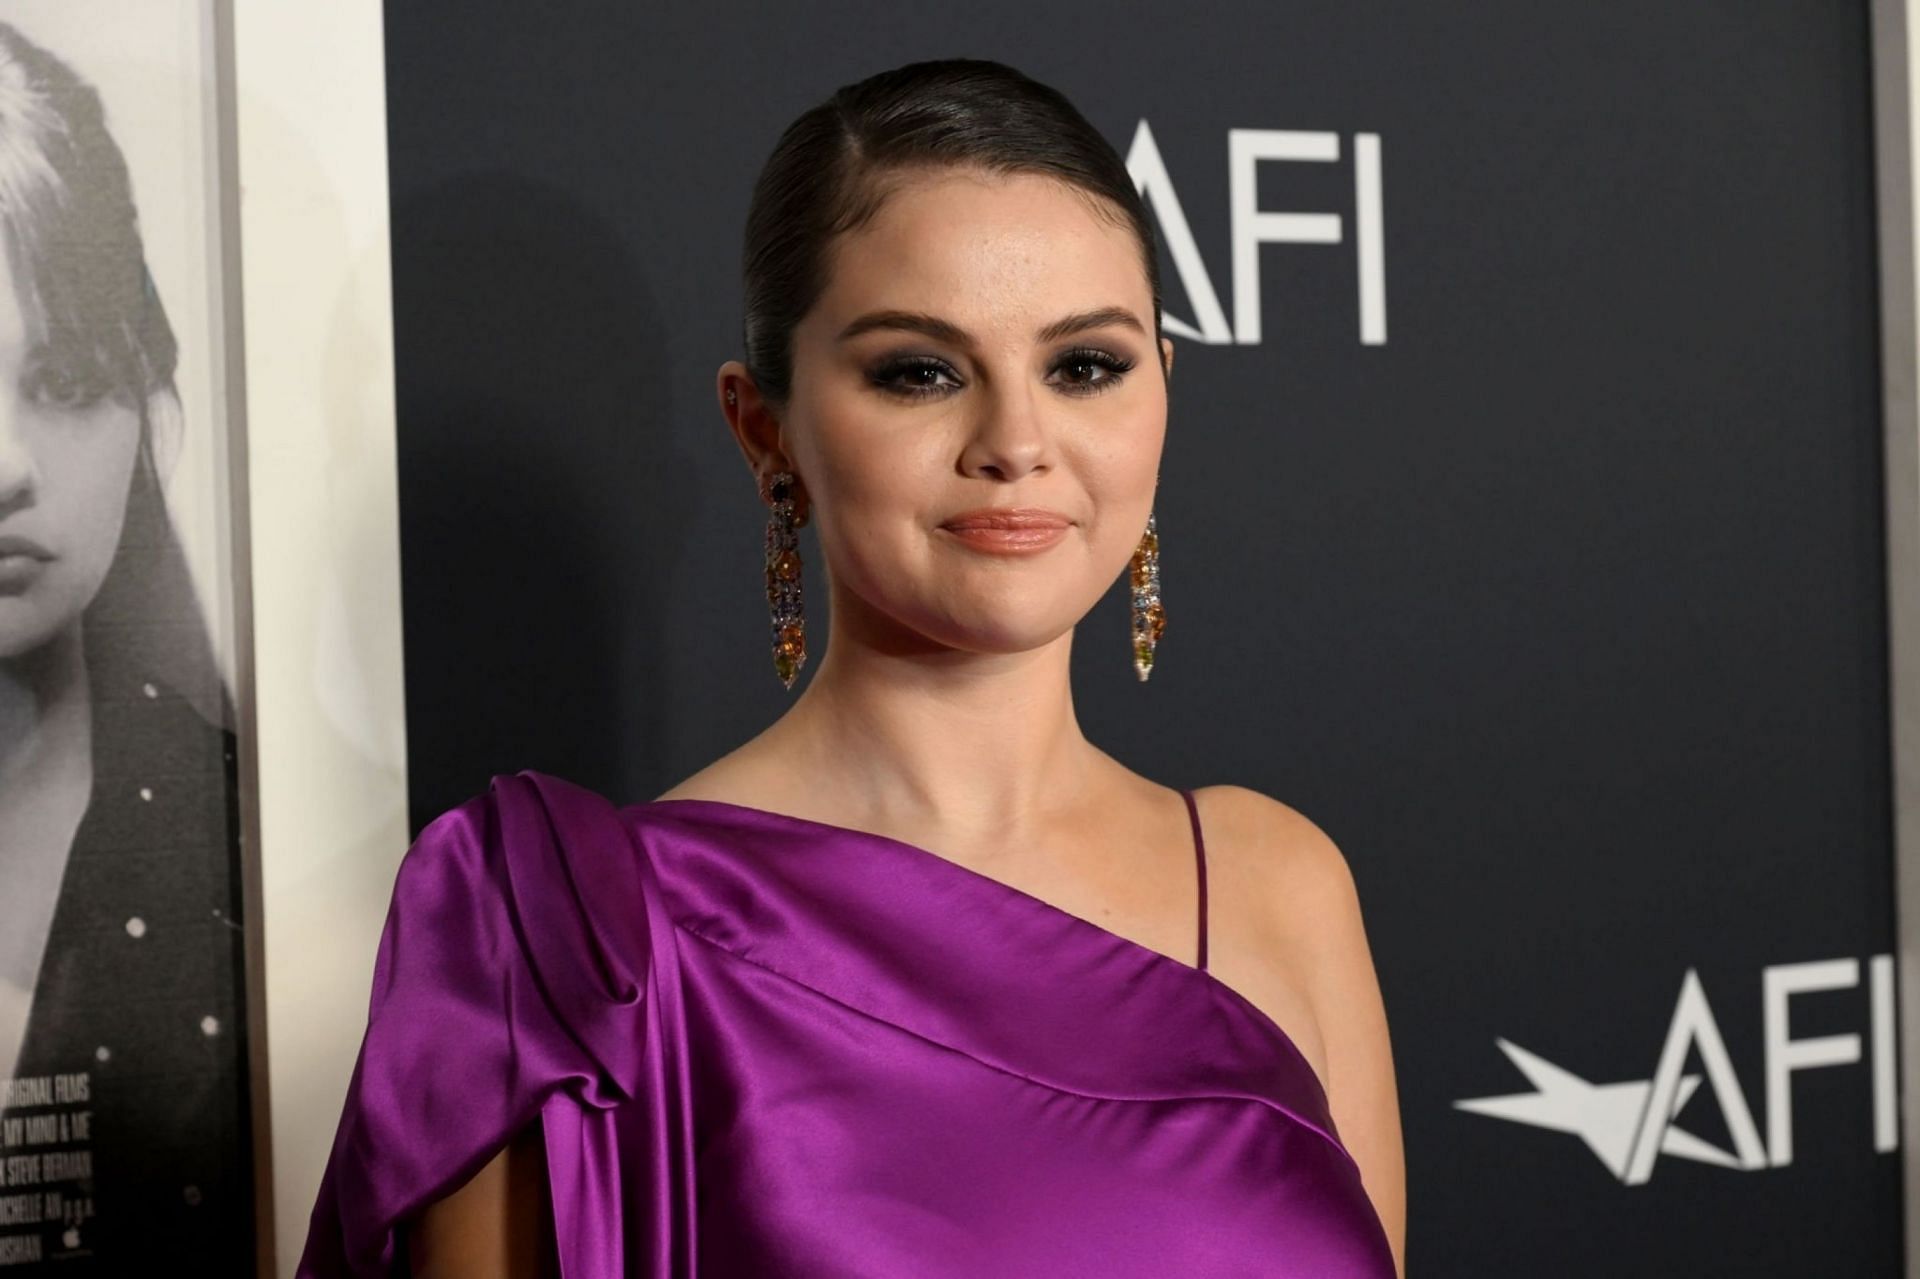 Selena Gomez at AFI Fest 2022 (Image via Getty Images)